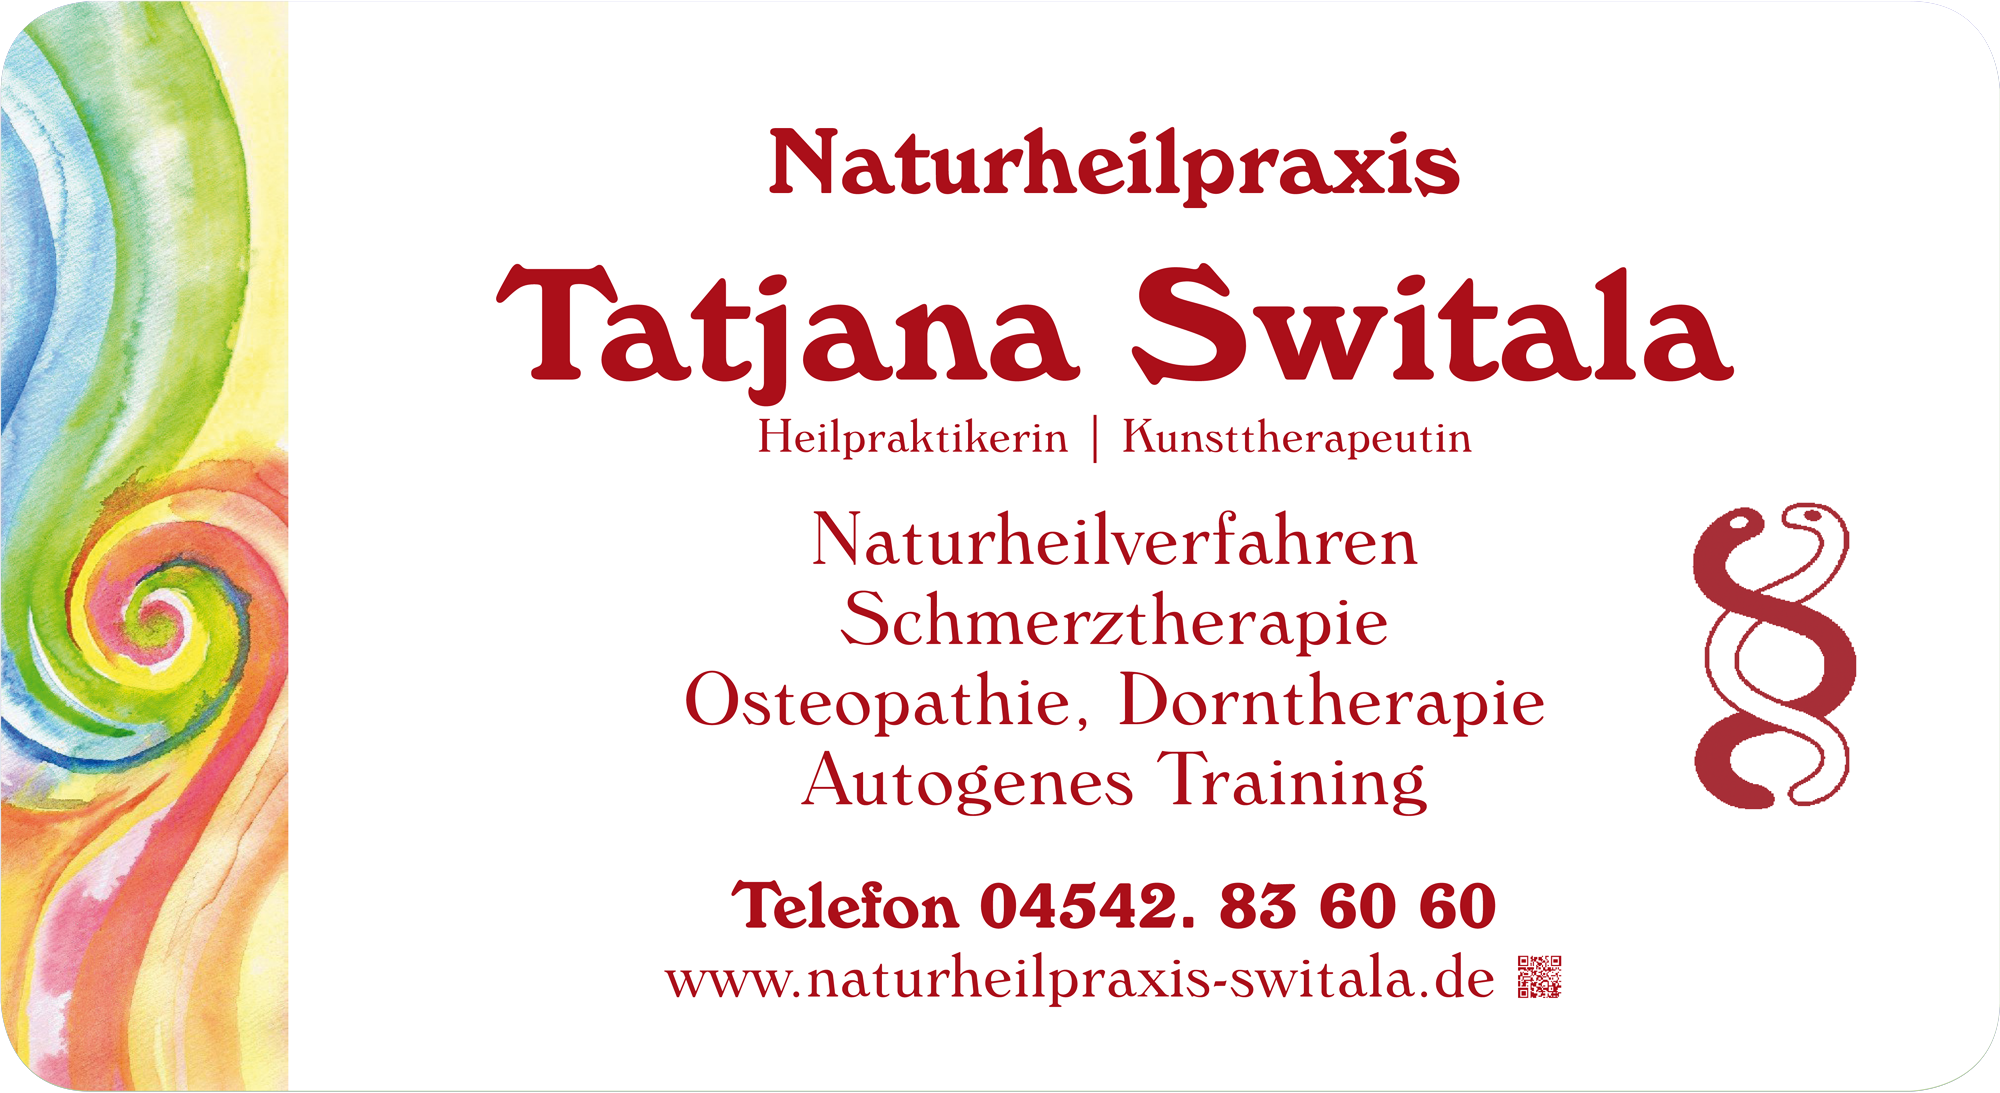 Tatjana Switala - Naturheilverfahren - Schmerztherapie - Osteopathie - Dorntherapie - Autogenes Training